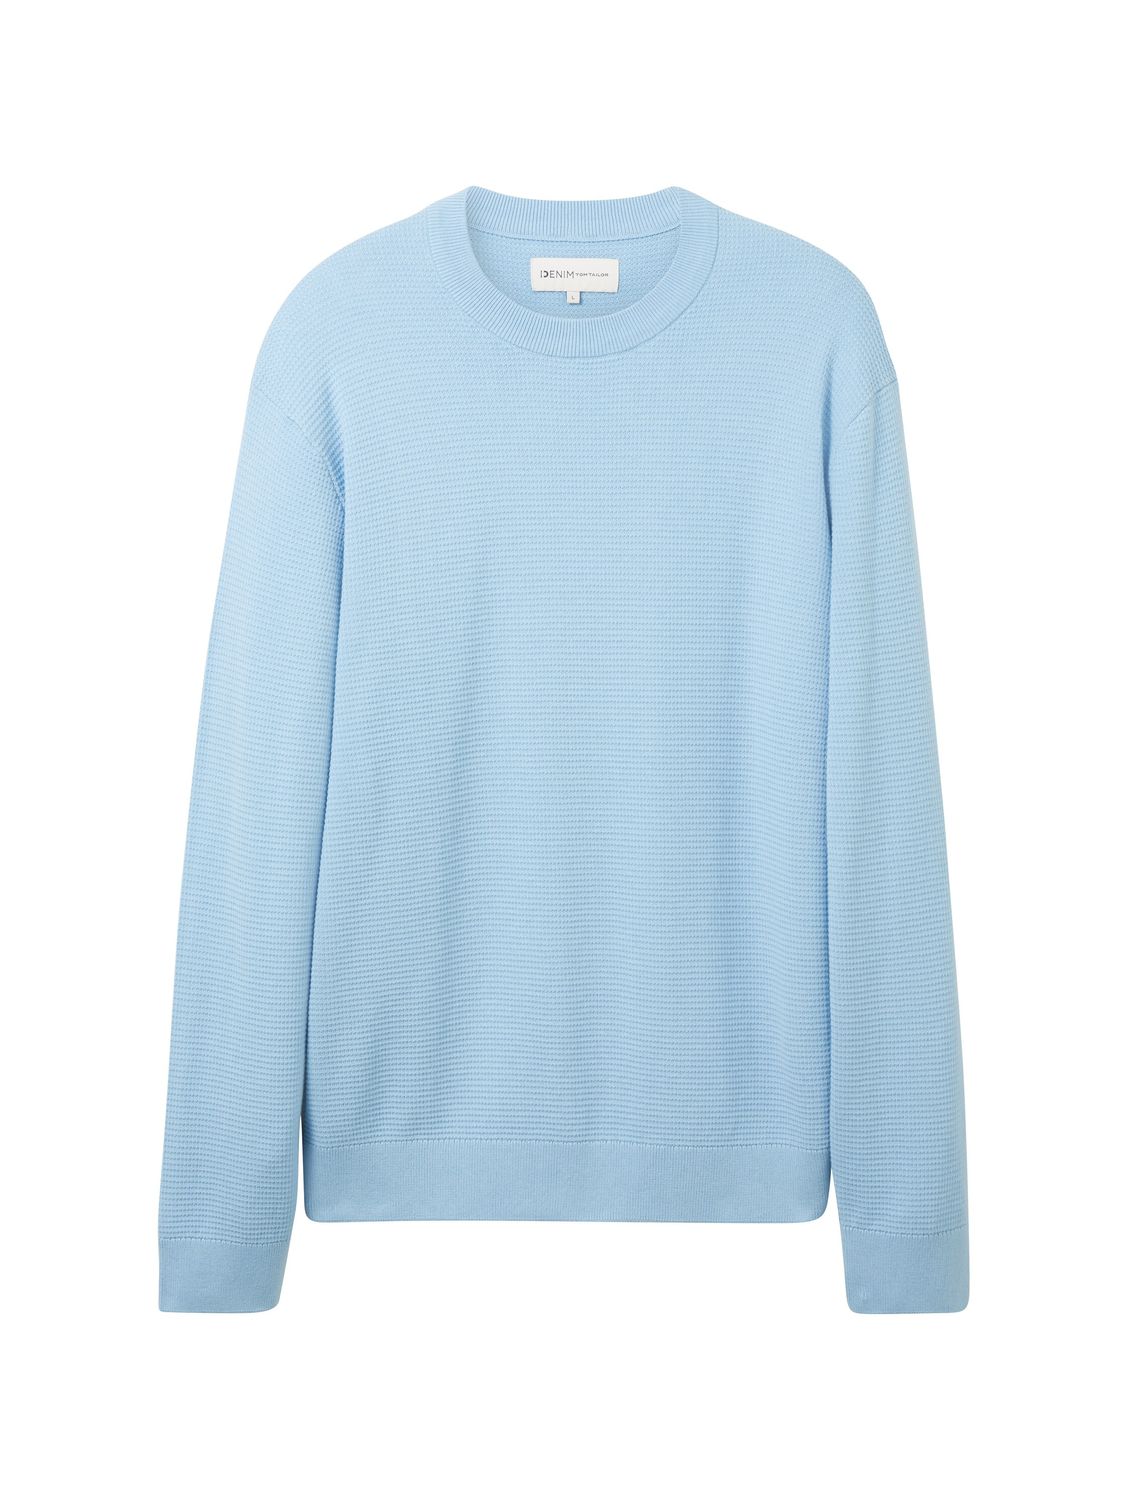 Пуловер TOM TAILOR Denim STRUCTURED BASIC, синий пуловер tom tailor denim basic серый